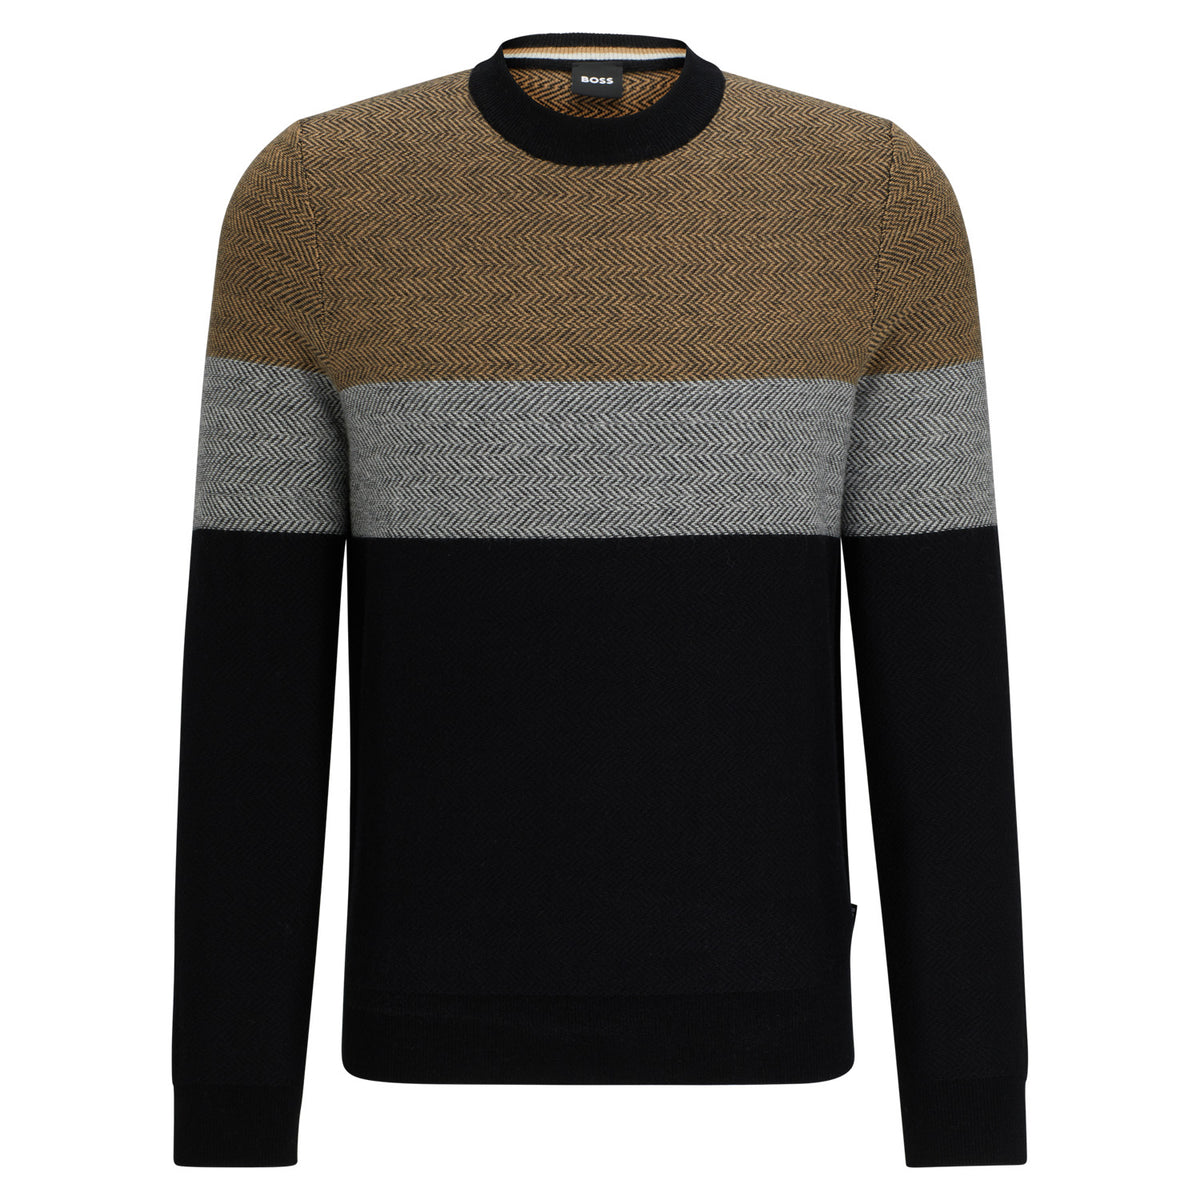 Herringbone-structured sweater in virgin wool and cotton